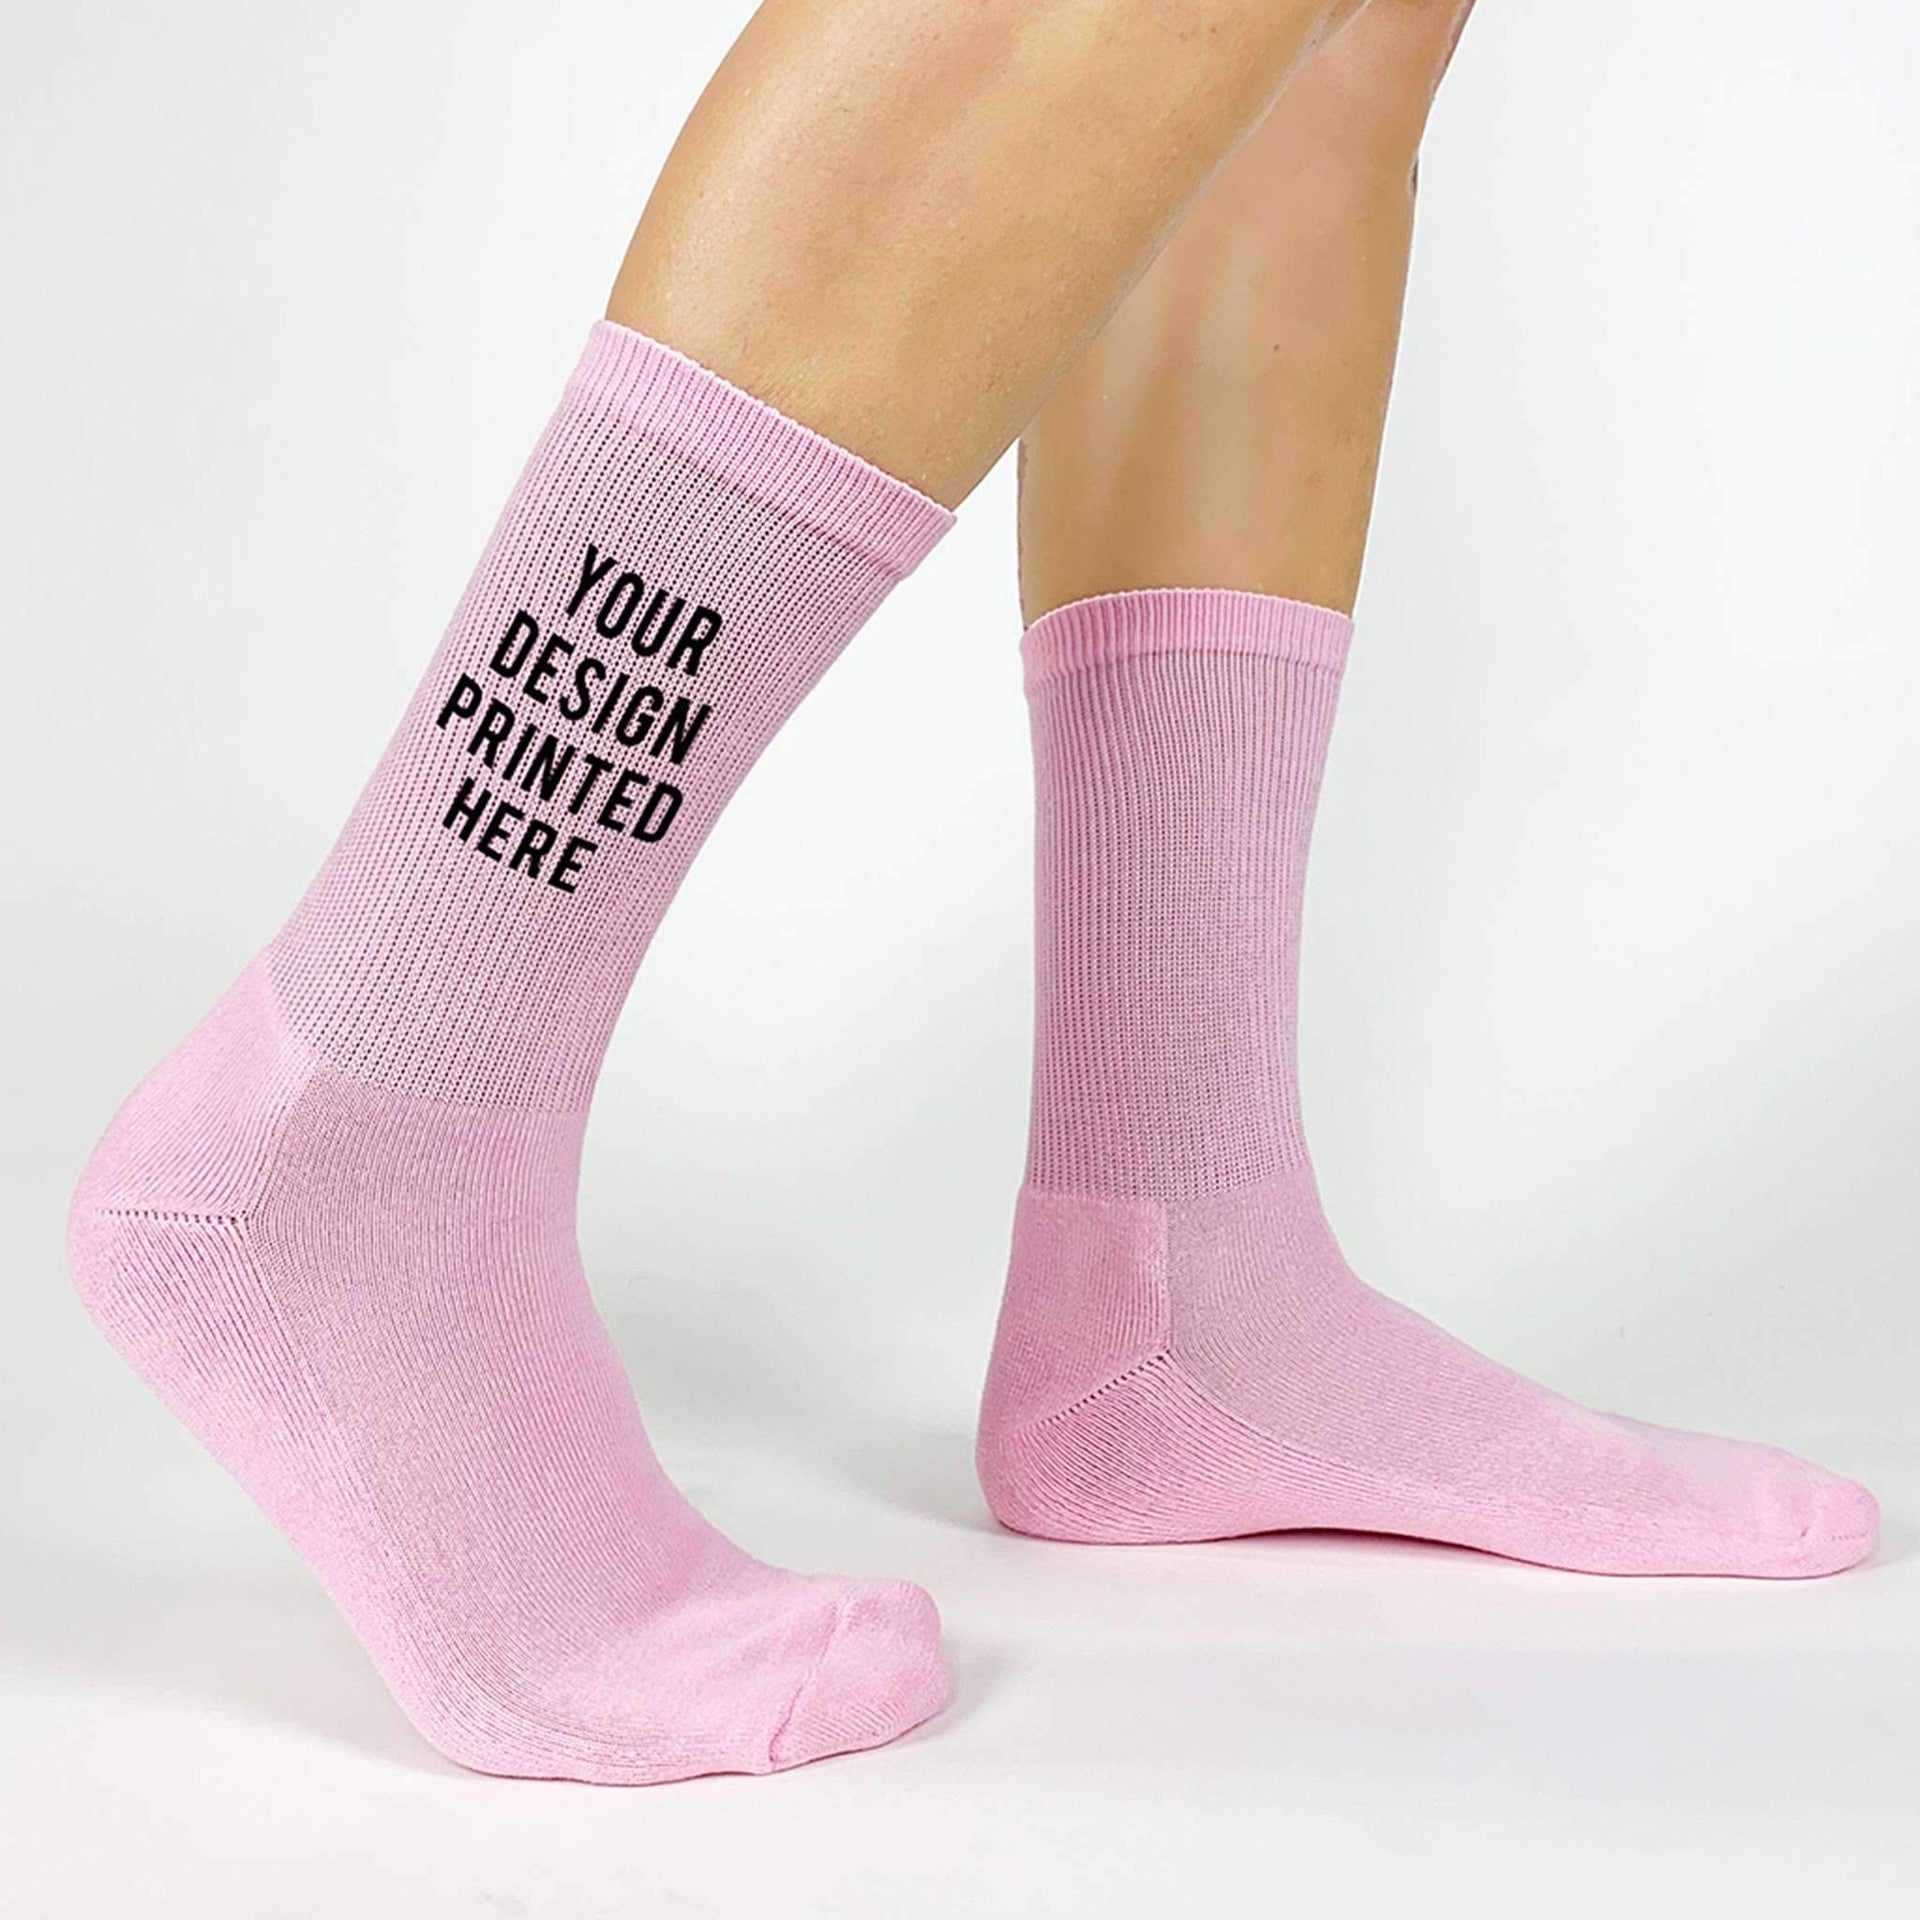 Create your own custom printed pink cotton crew socks.